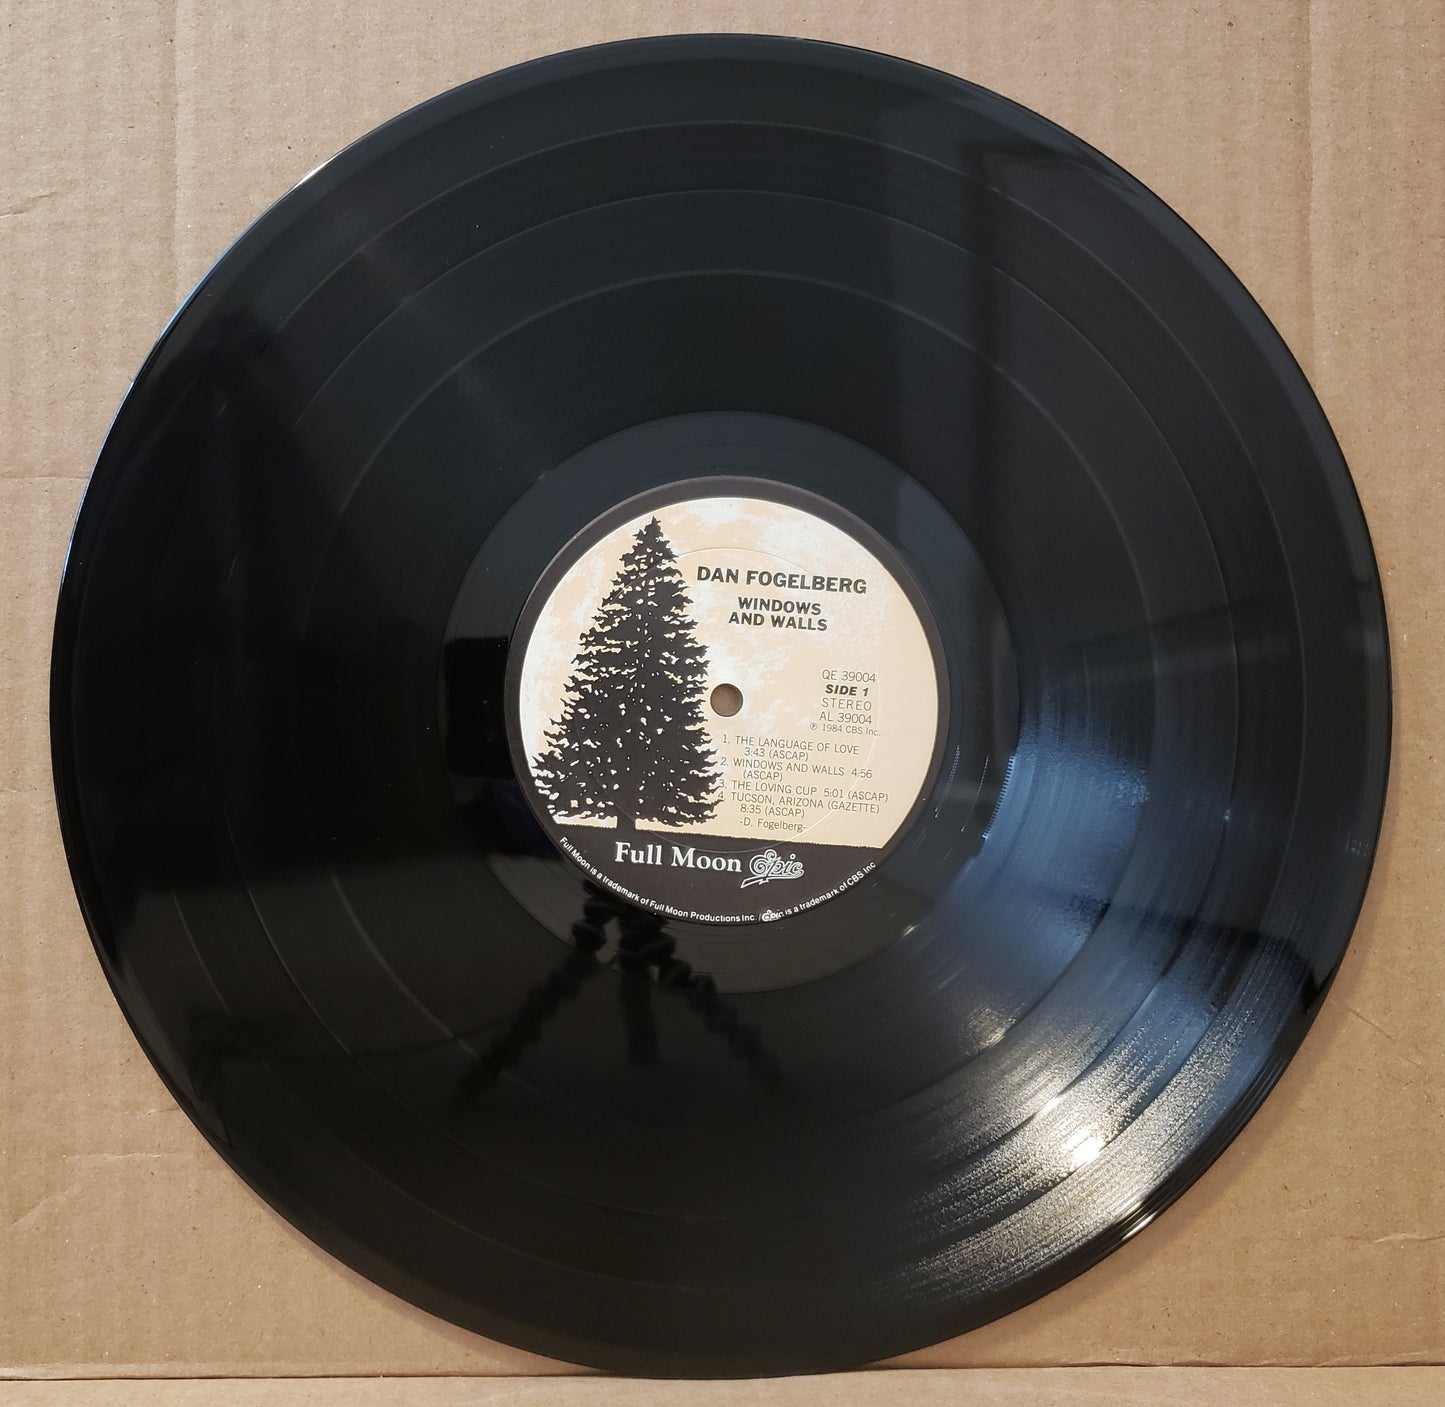 Dan Fogelberg - Windows and Walls [1984 Pitman] [Used Vinyl Record LP] [B]